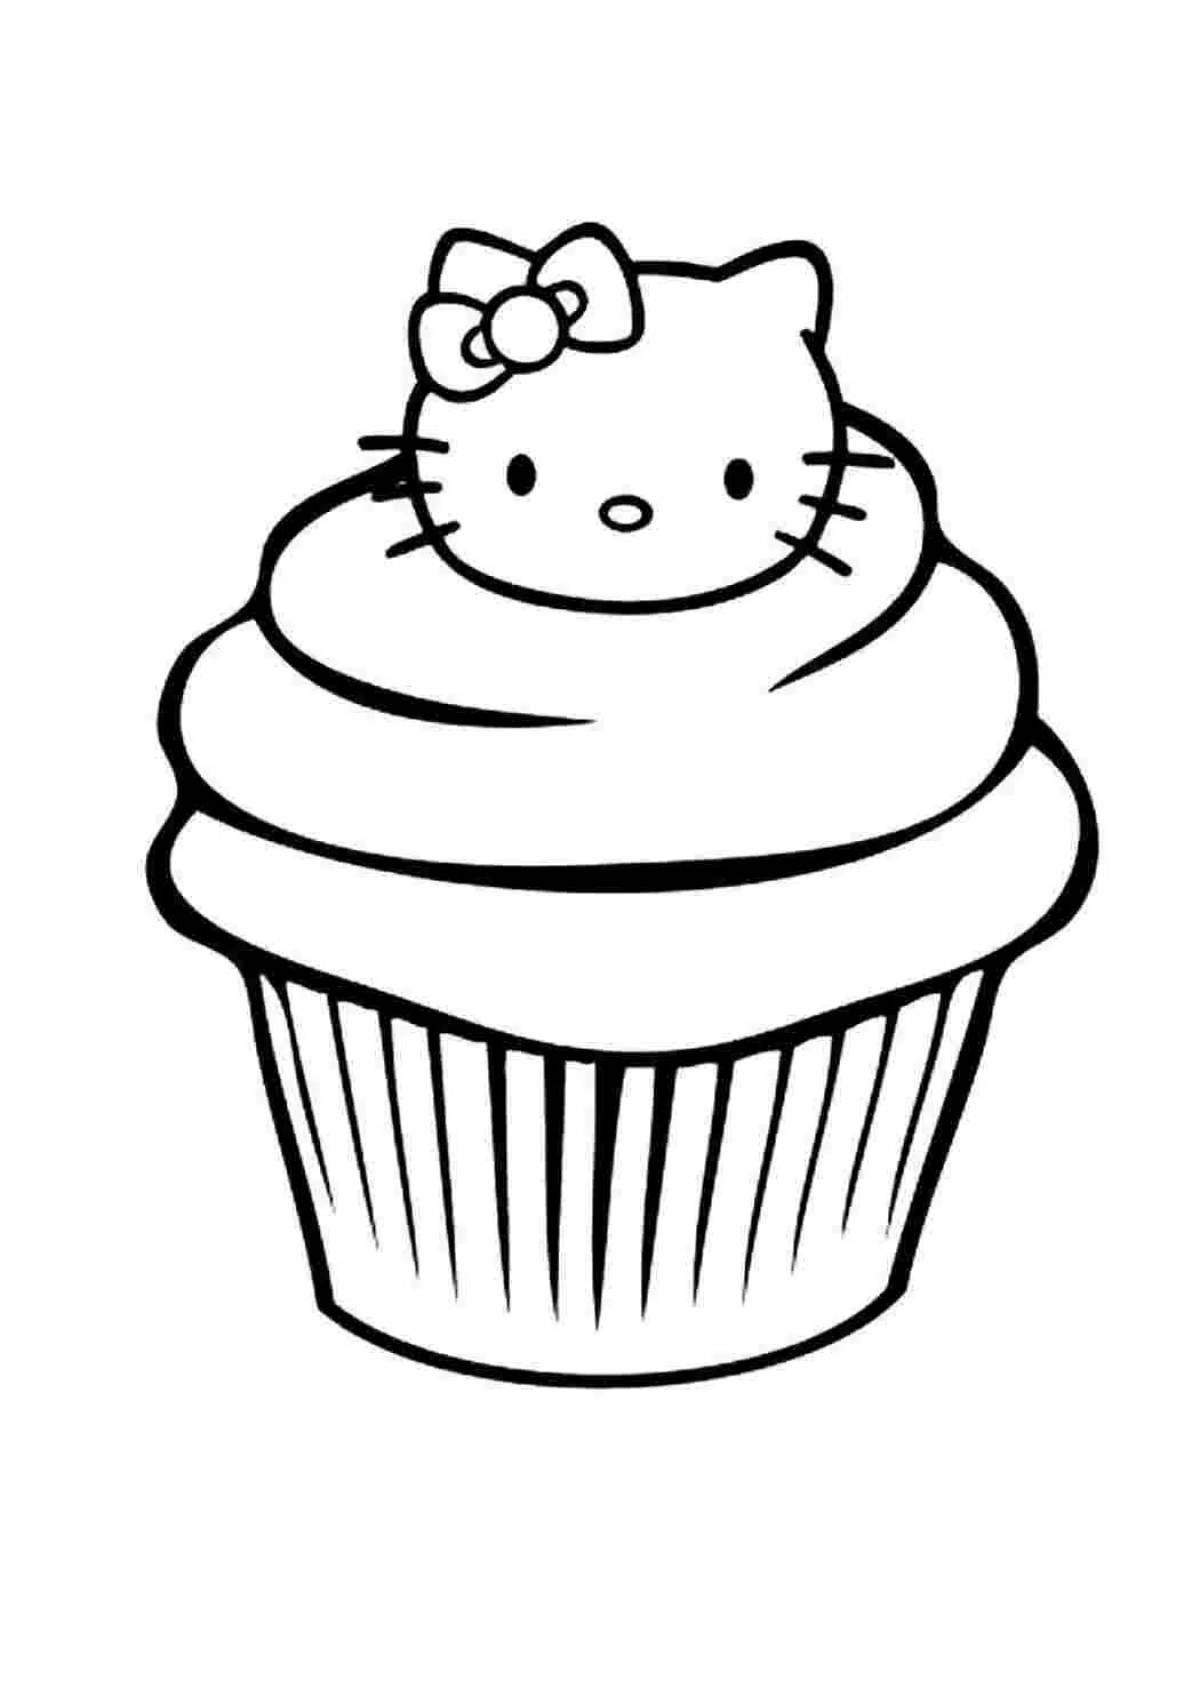 Fabulous cupcake coloring page